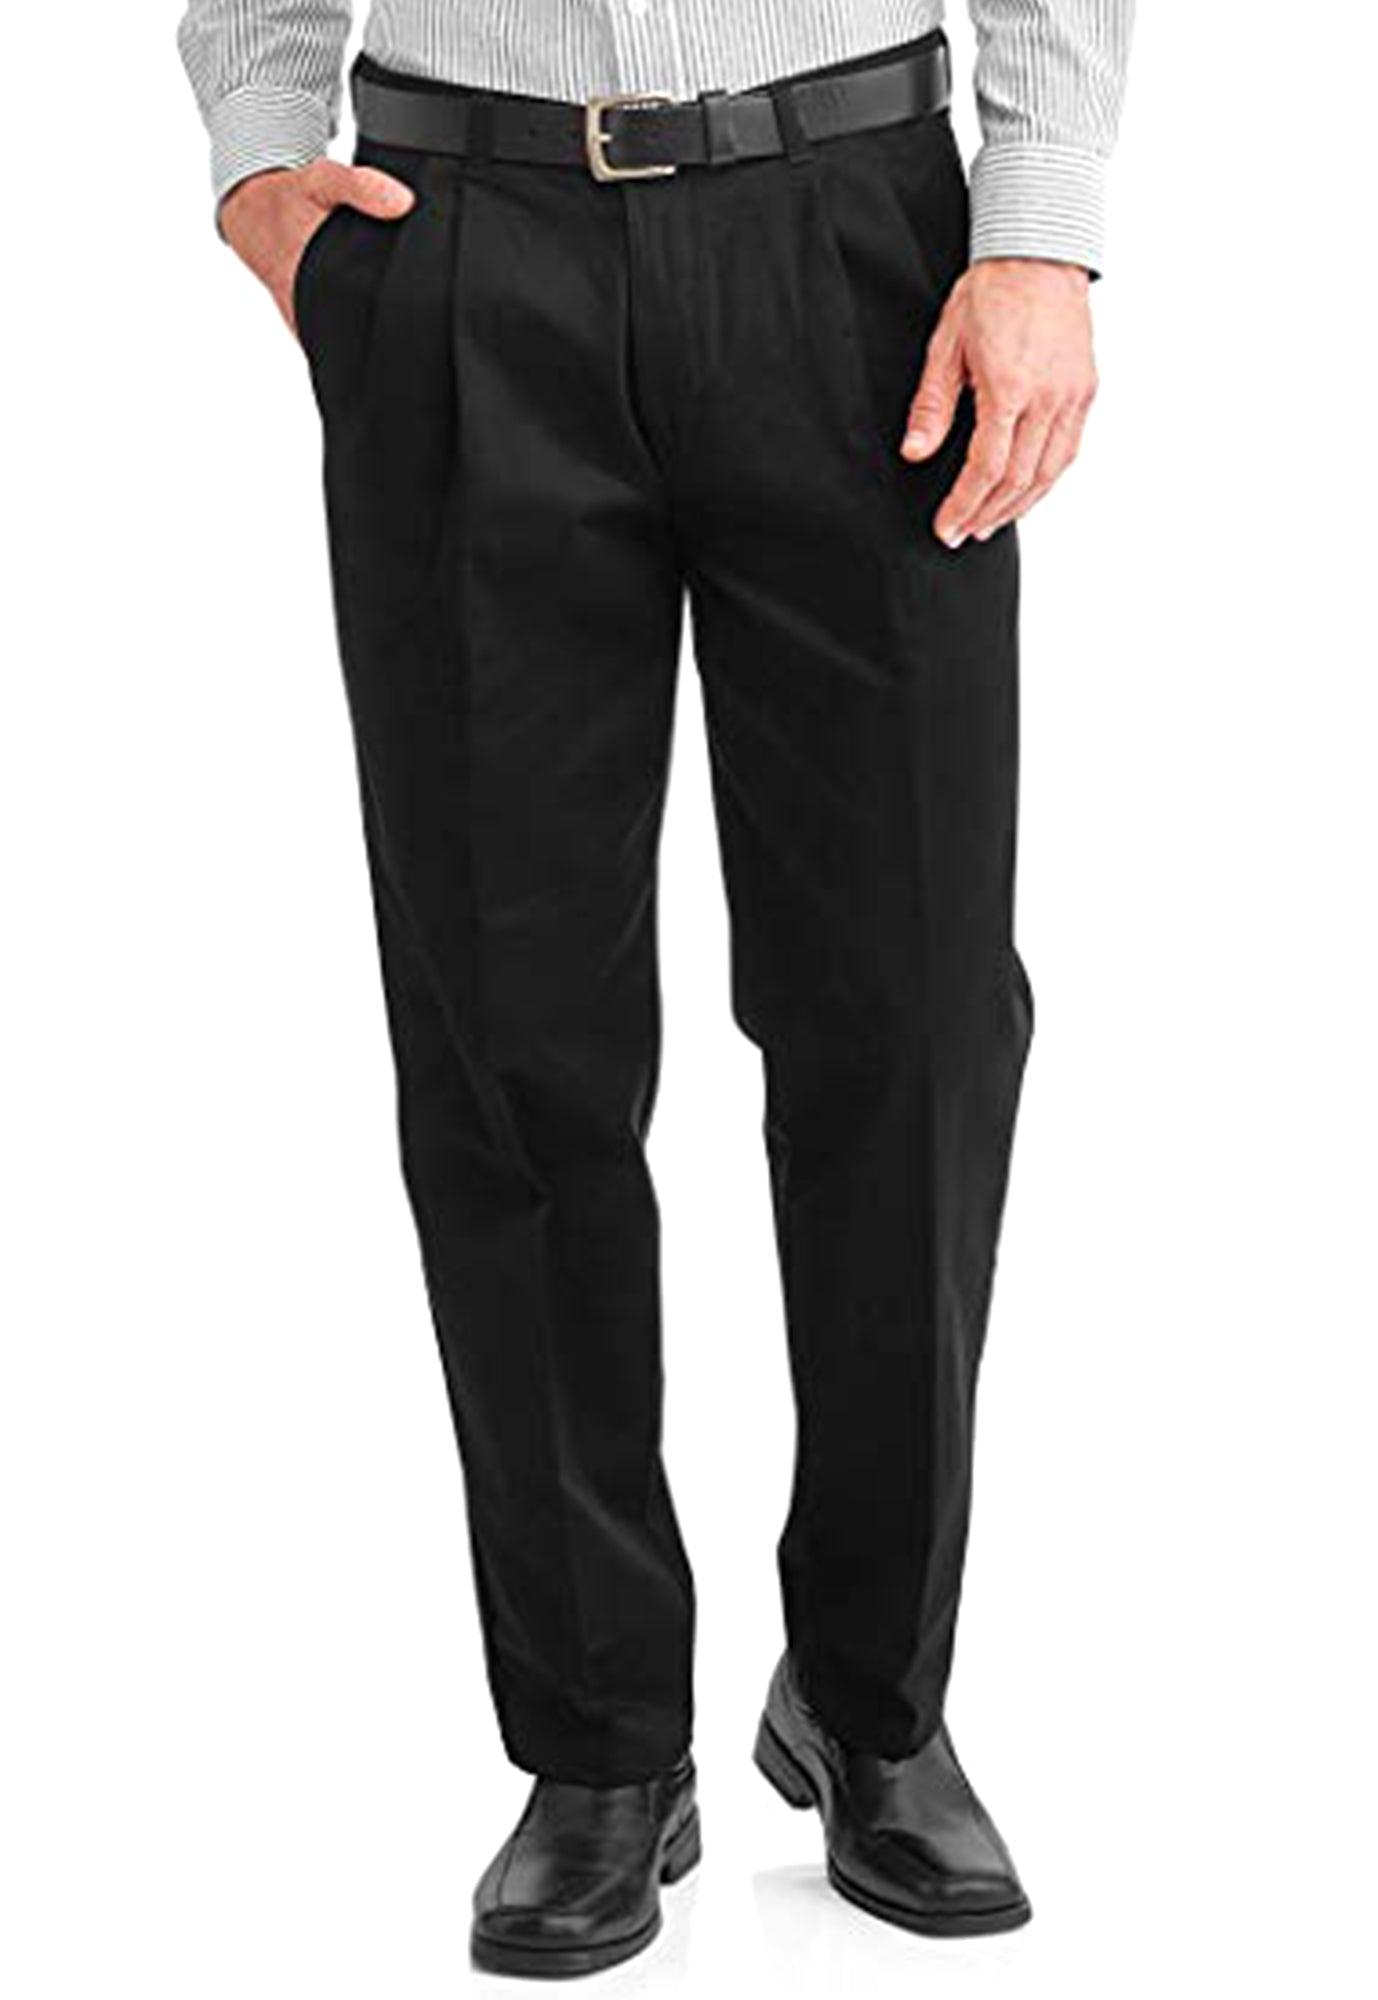 Men's formal linen pants, WEEKDAY Solstice trousers, Khaki Brown, adjustable  waist. | Mens formal, Linen men, Khaki